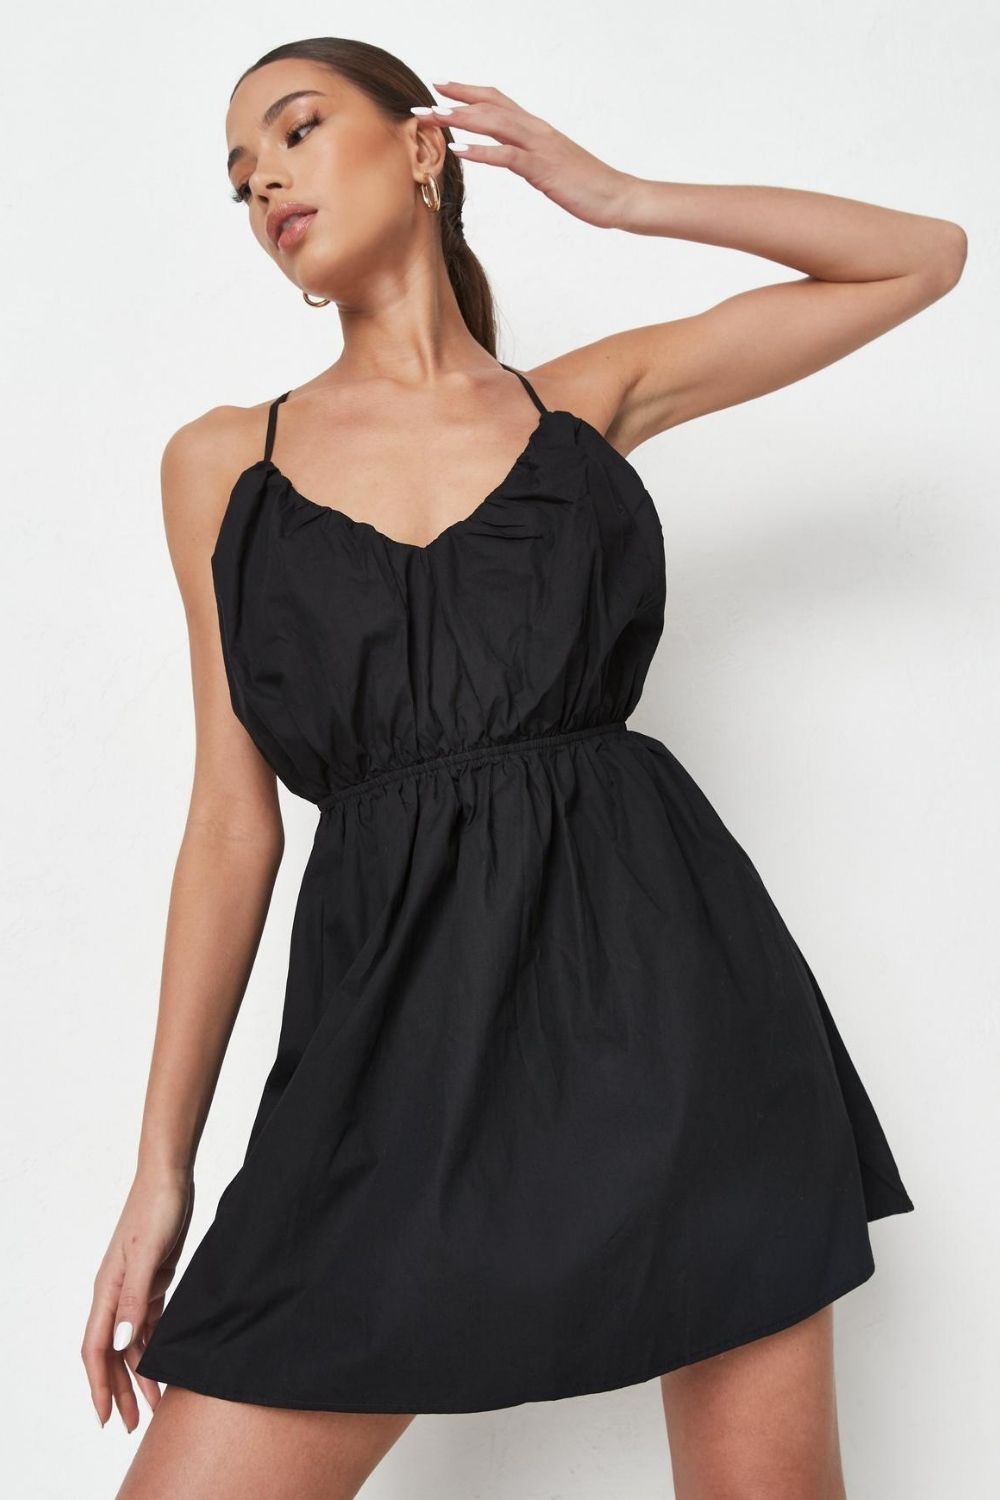 Shirred waist Backless Black Mini Dress